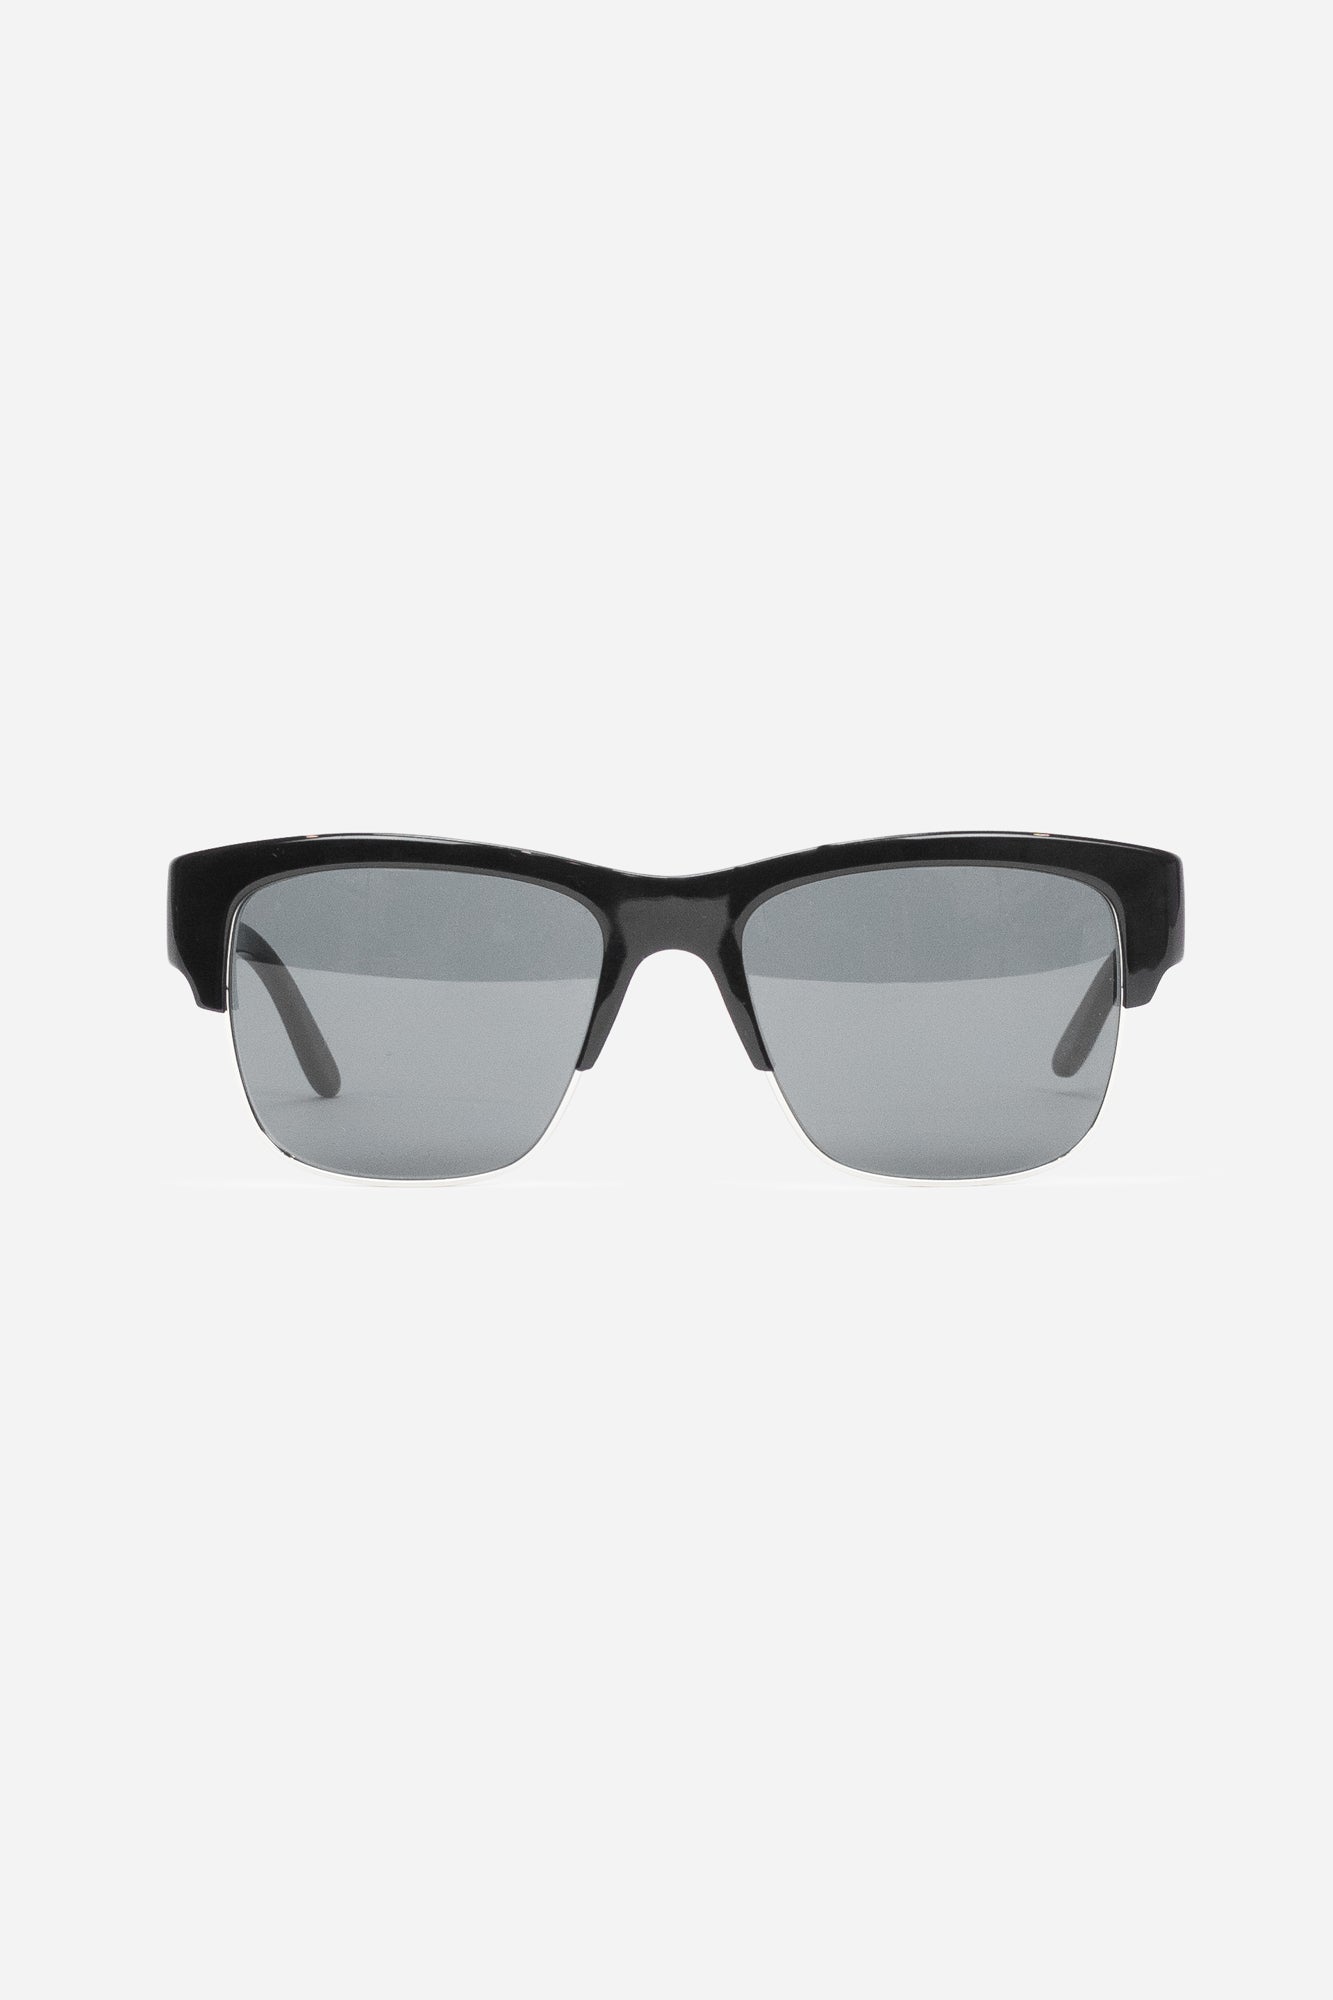 Black and Navy Square Frame Sunglasses